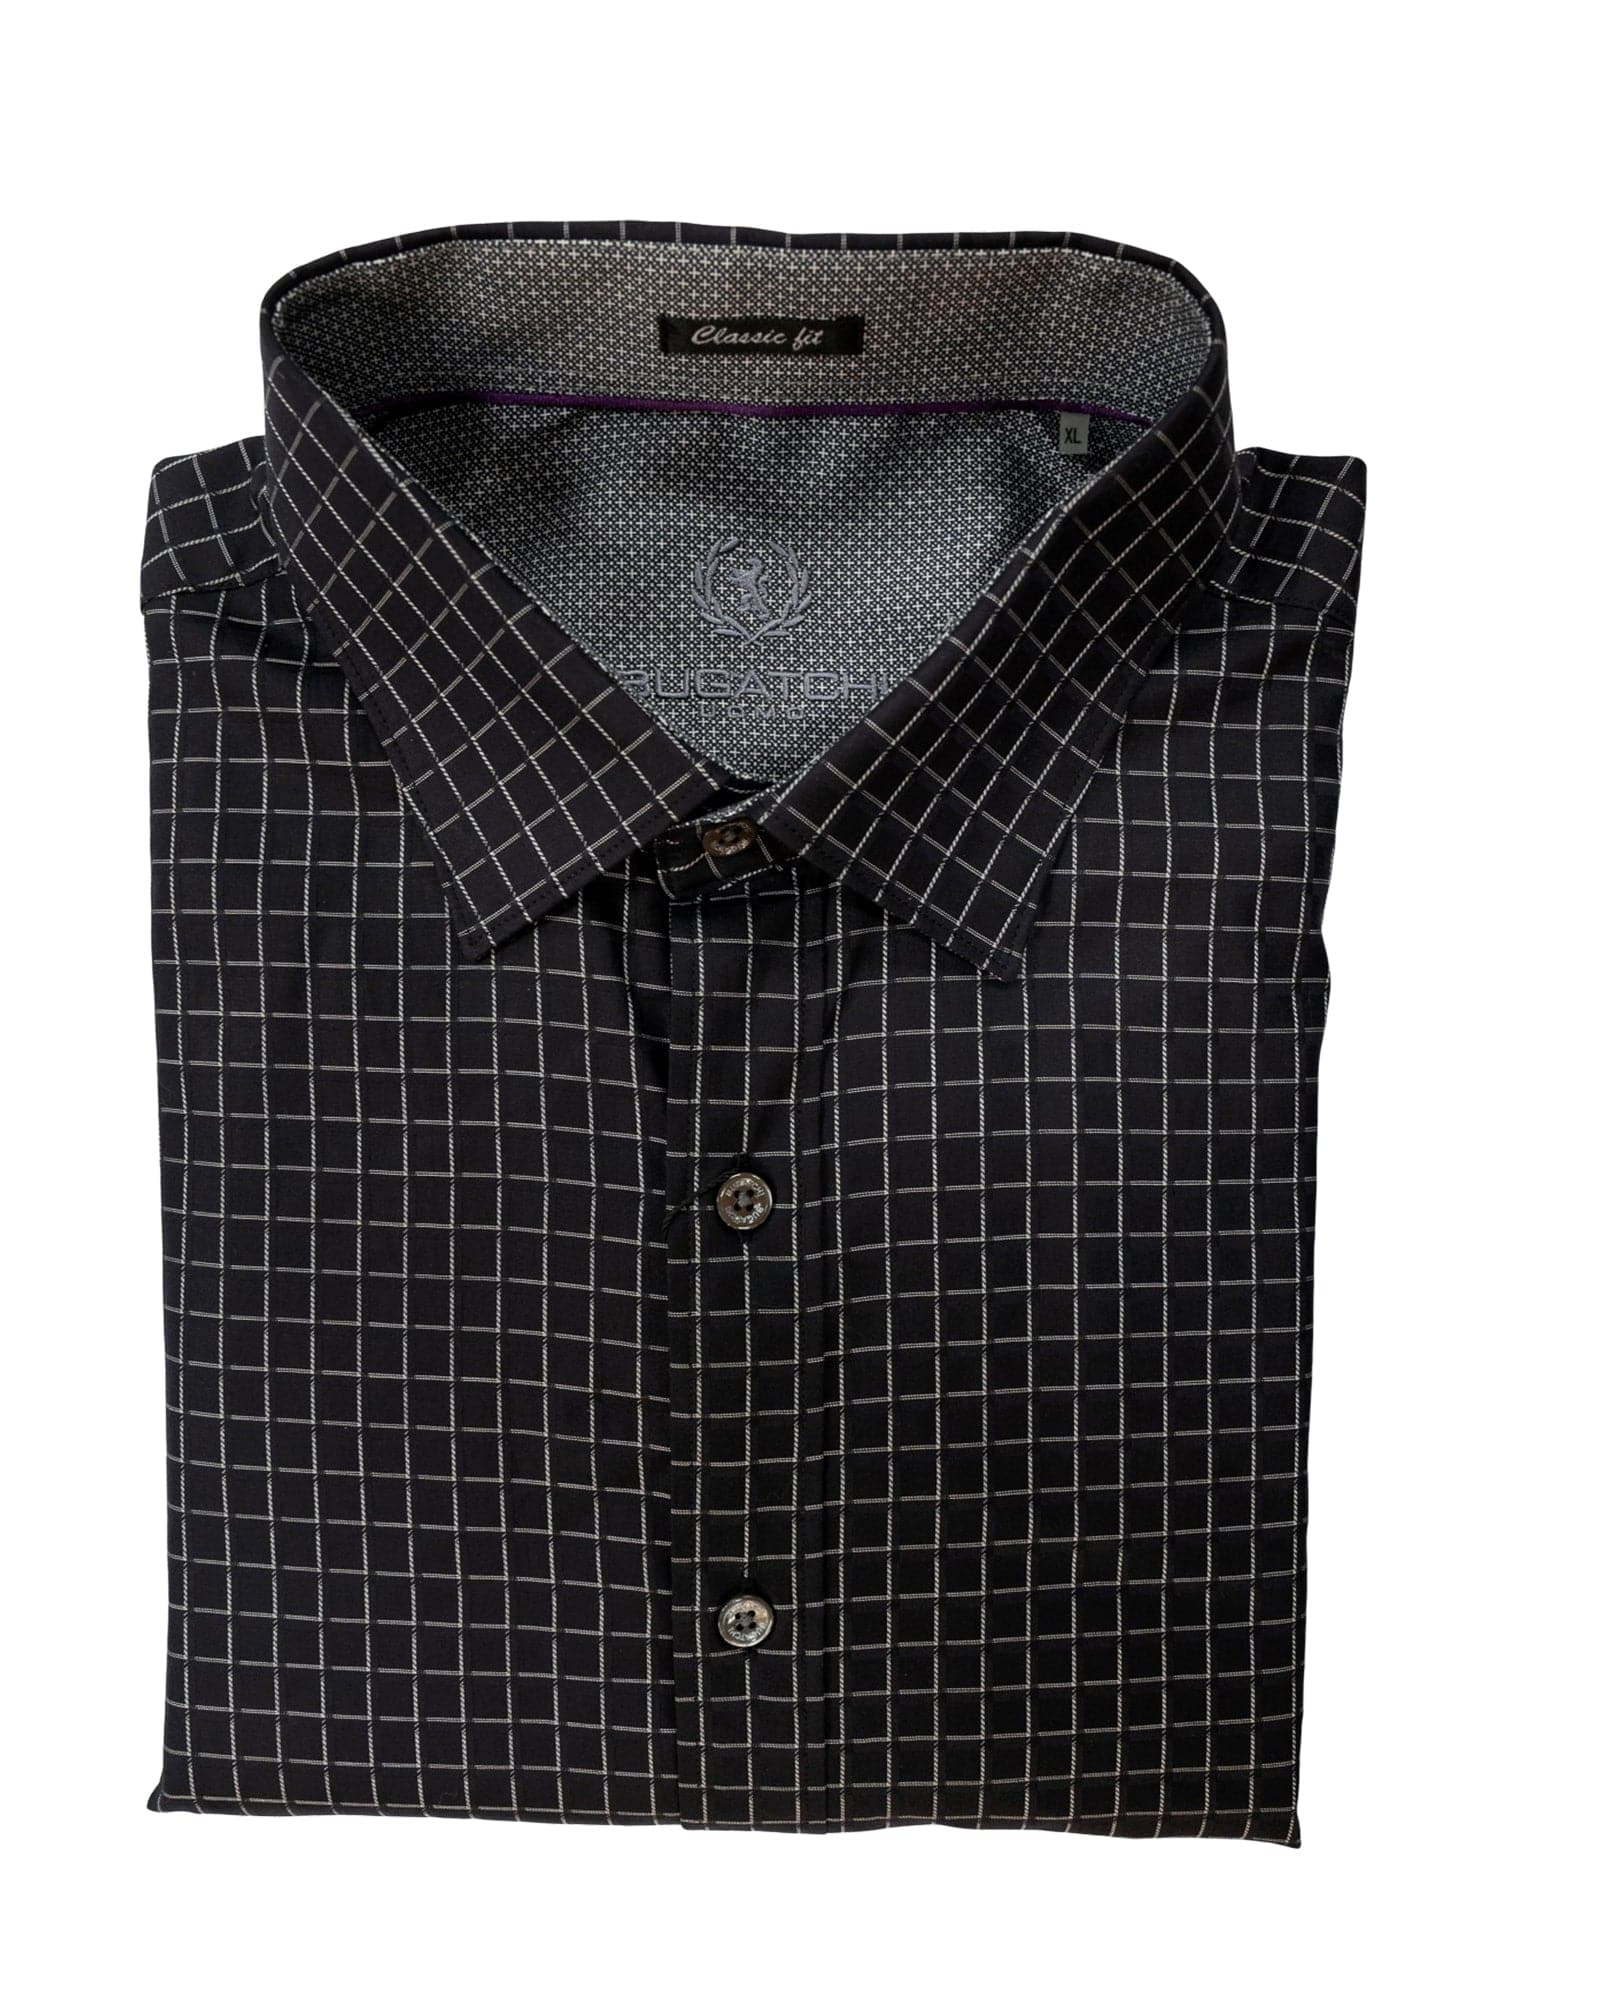 Bugatchi Black Check Print Sport Shirt - Rainwater's Men's Clothing and Tuxedo Rental